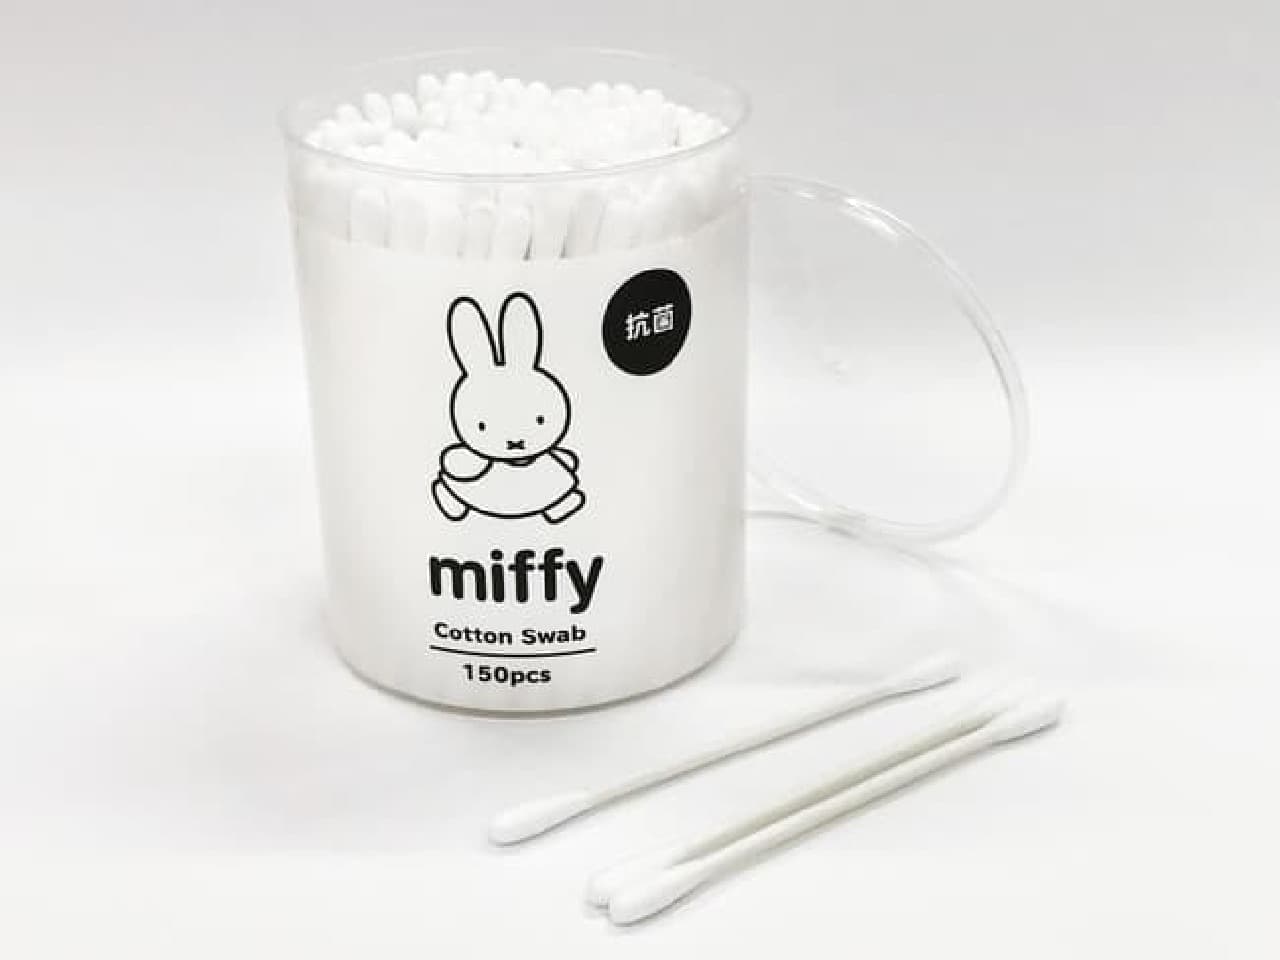 Miffy Makeup Series "Miffy Cotton Swabs"